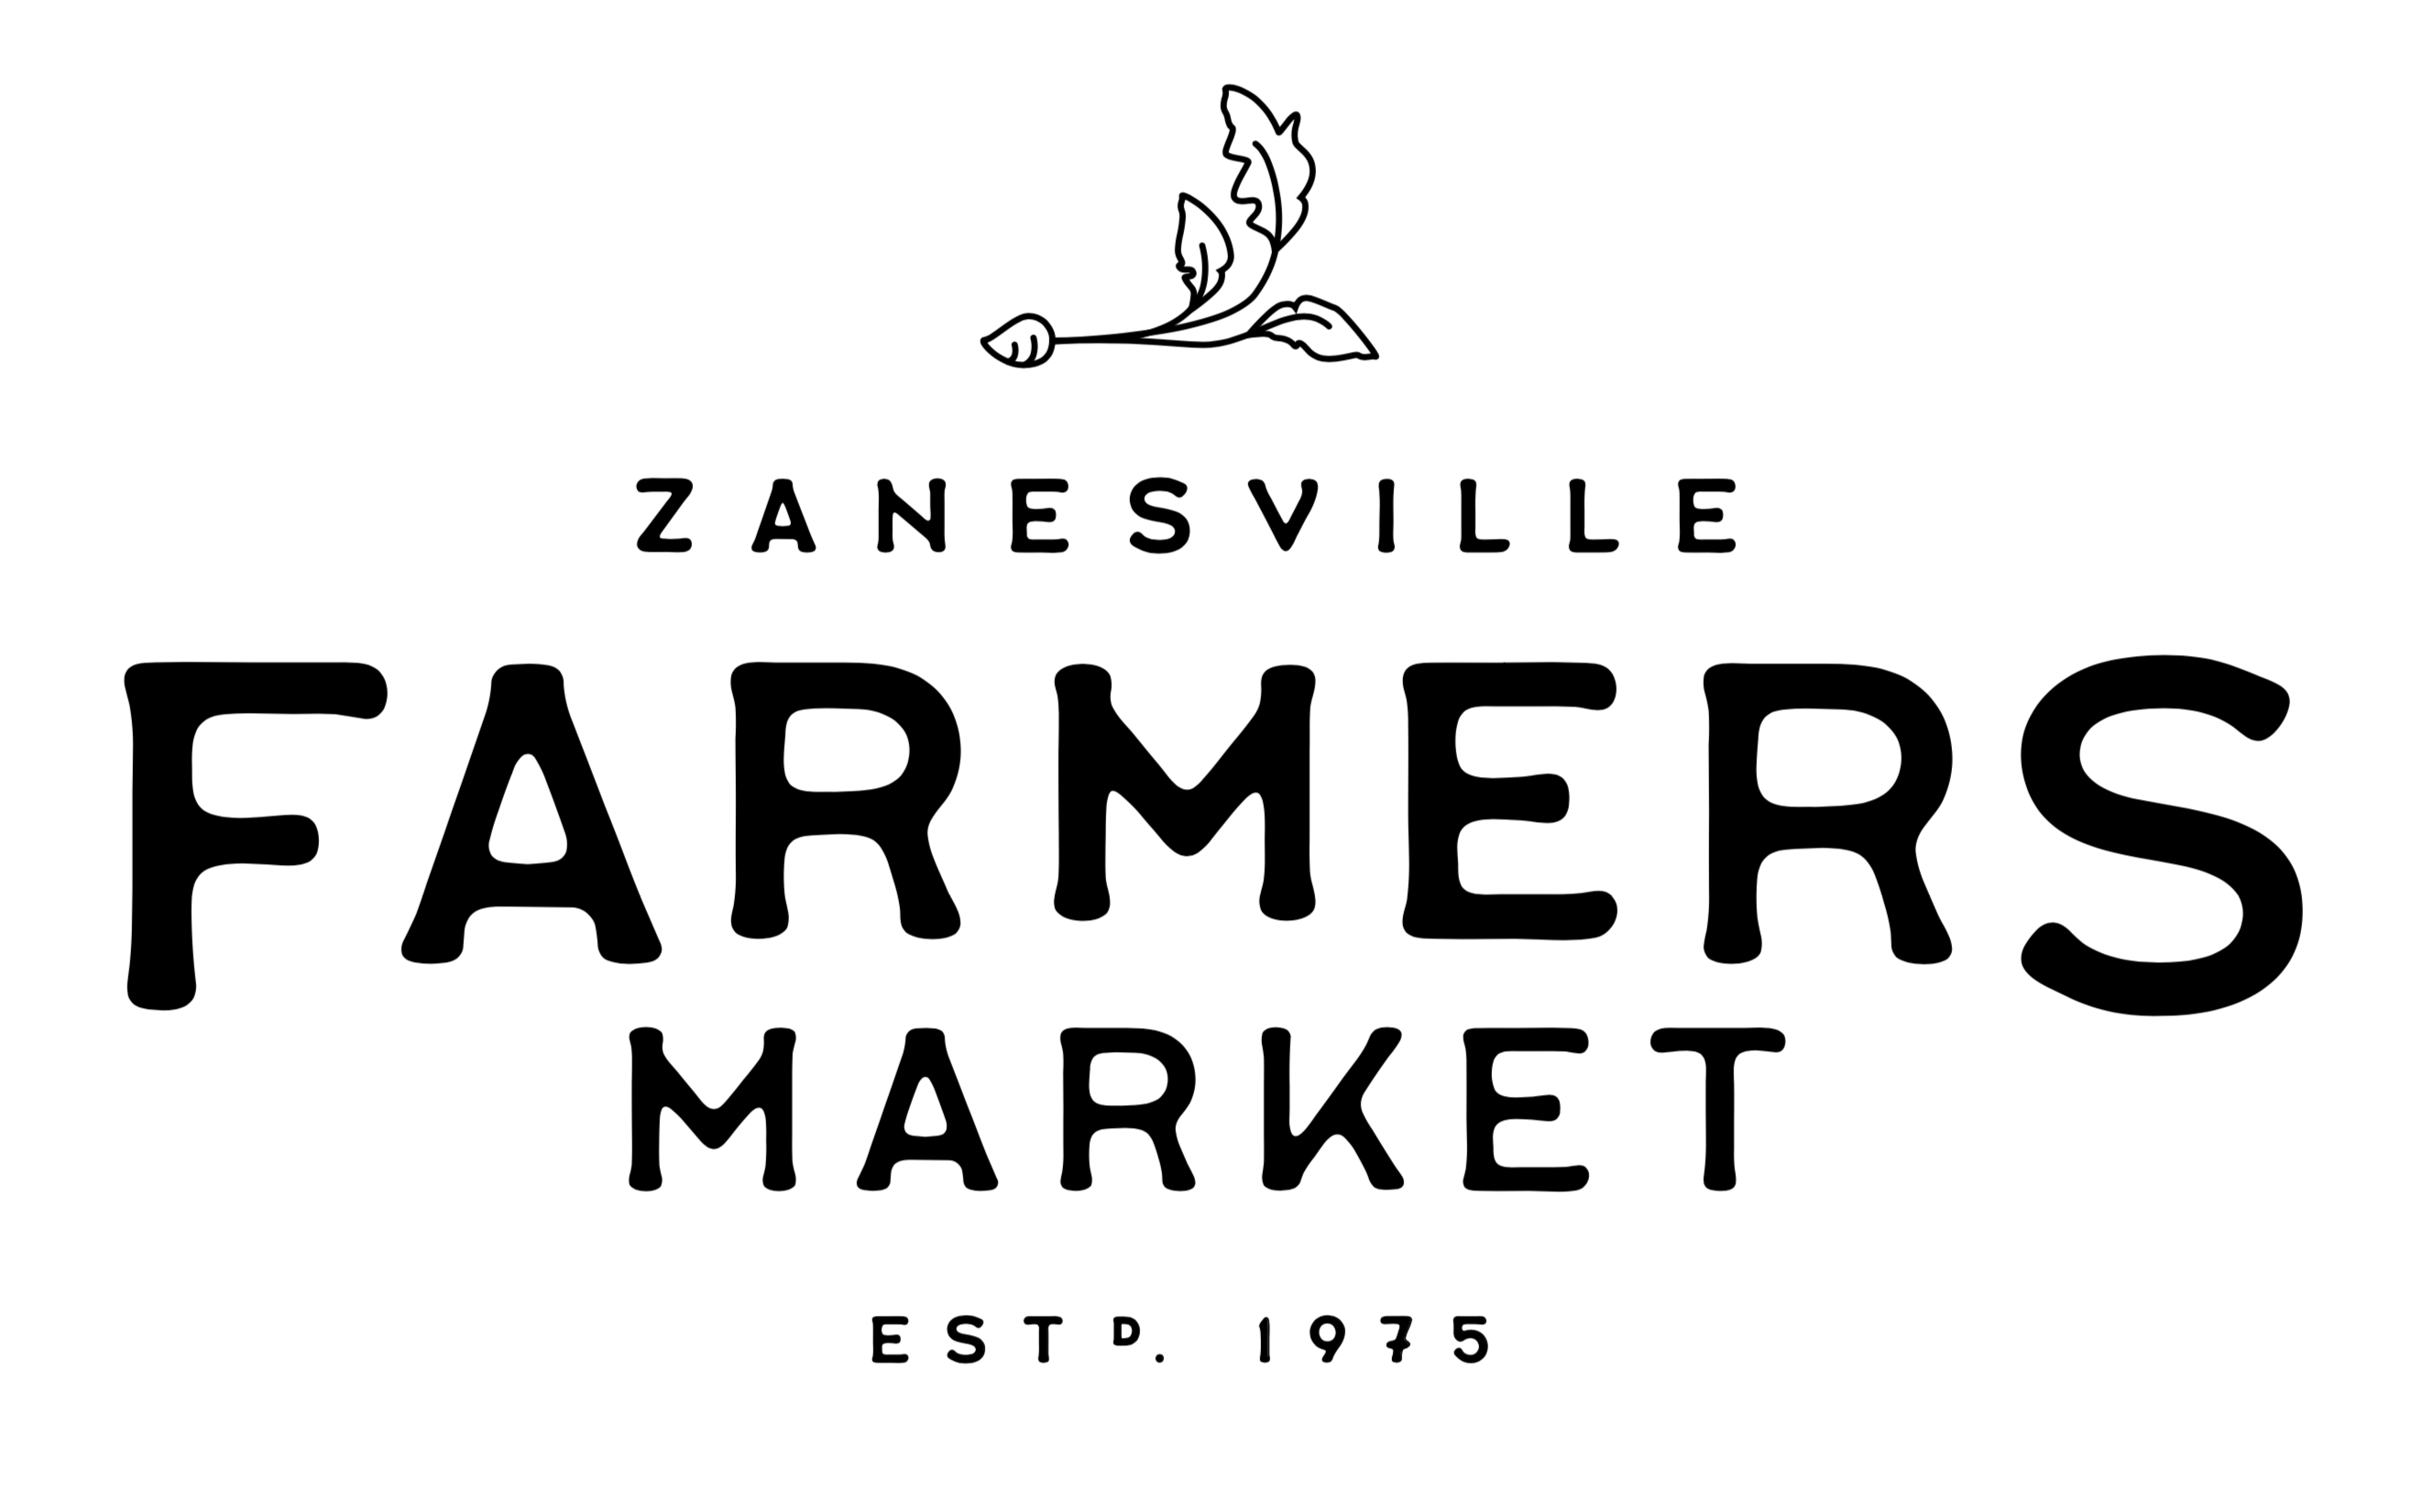 The logo for the Zanesville Farmer's Market.